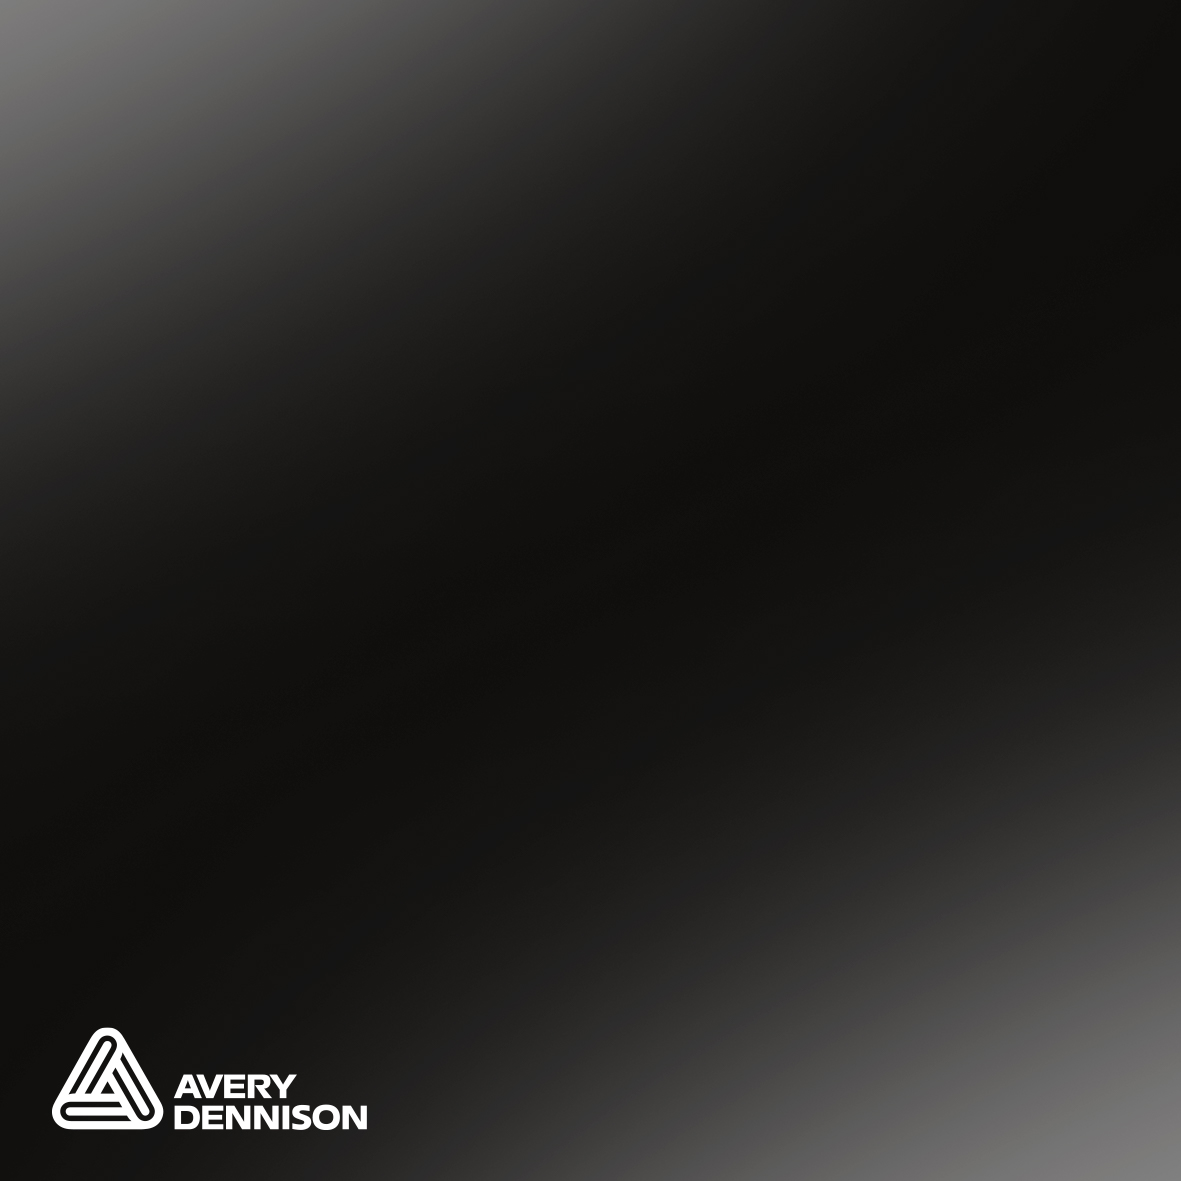 Avery 800-801PC Black gloss sort blank polymer støbt skærefolie dekorationsfolie carl jensen